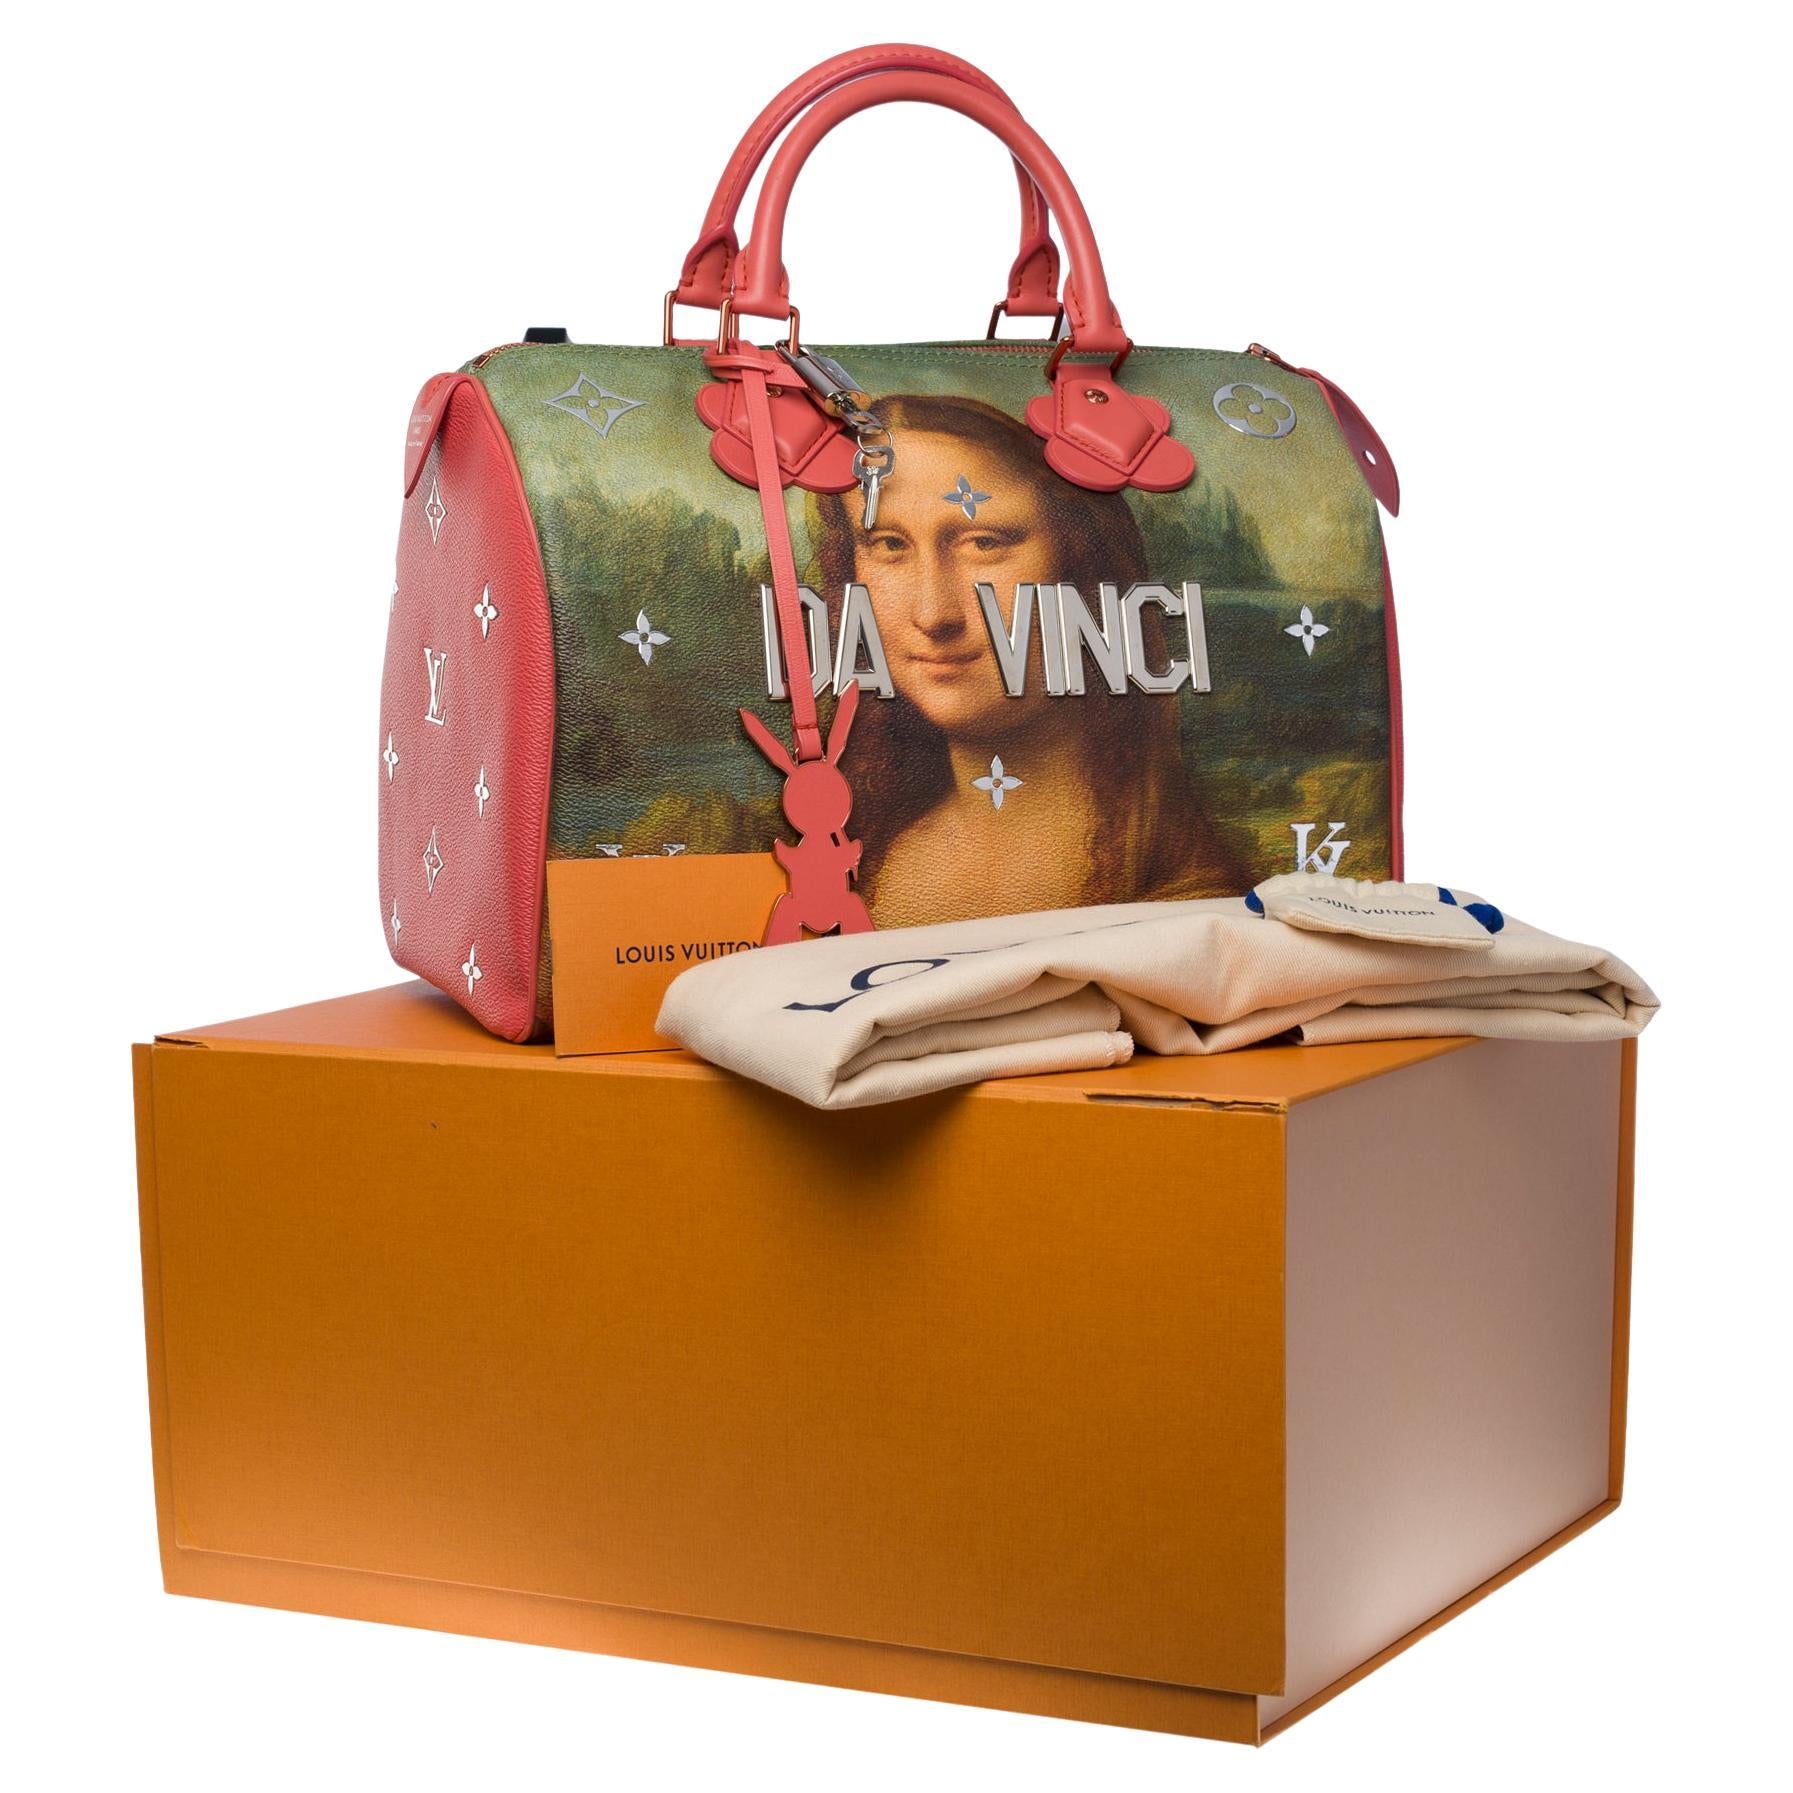 New in Box Vuitton Masters Mona Lisa Jeff Koons Speedy 30 Bag at